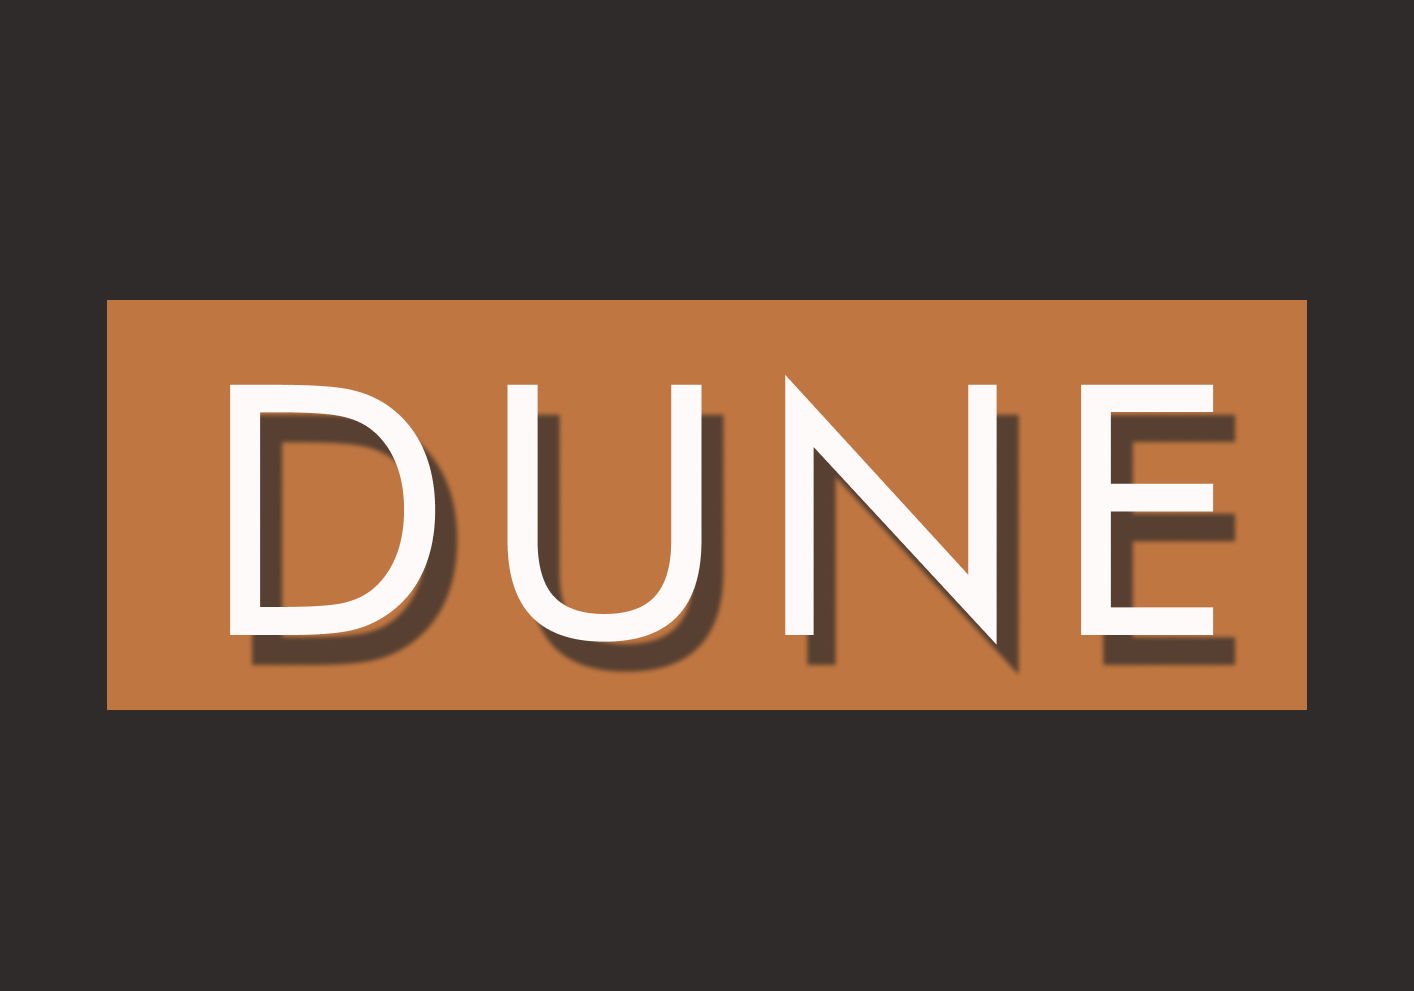 The word Dune in an orange box.